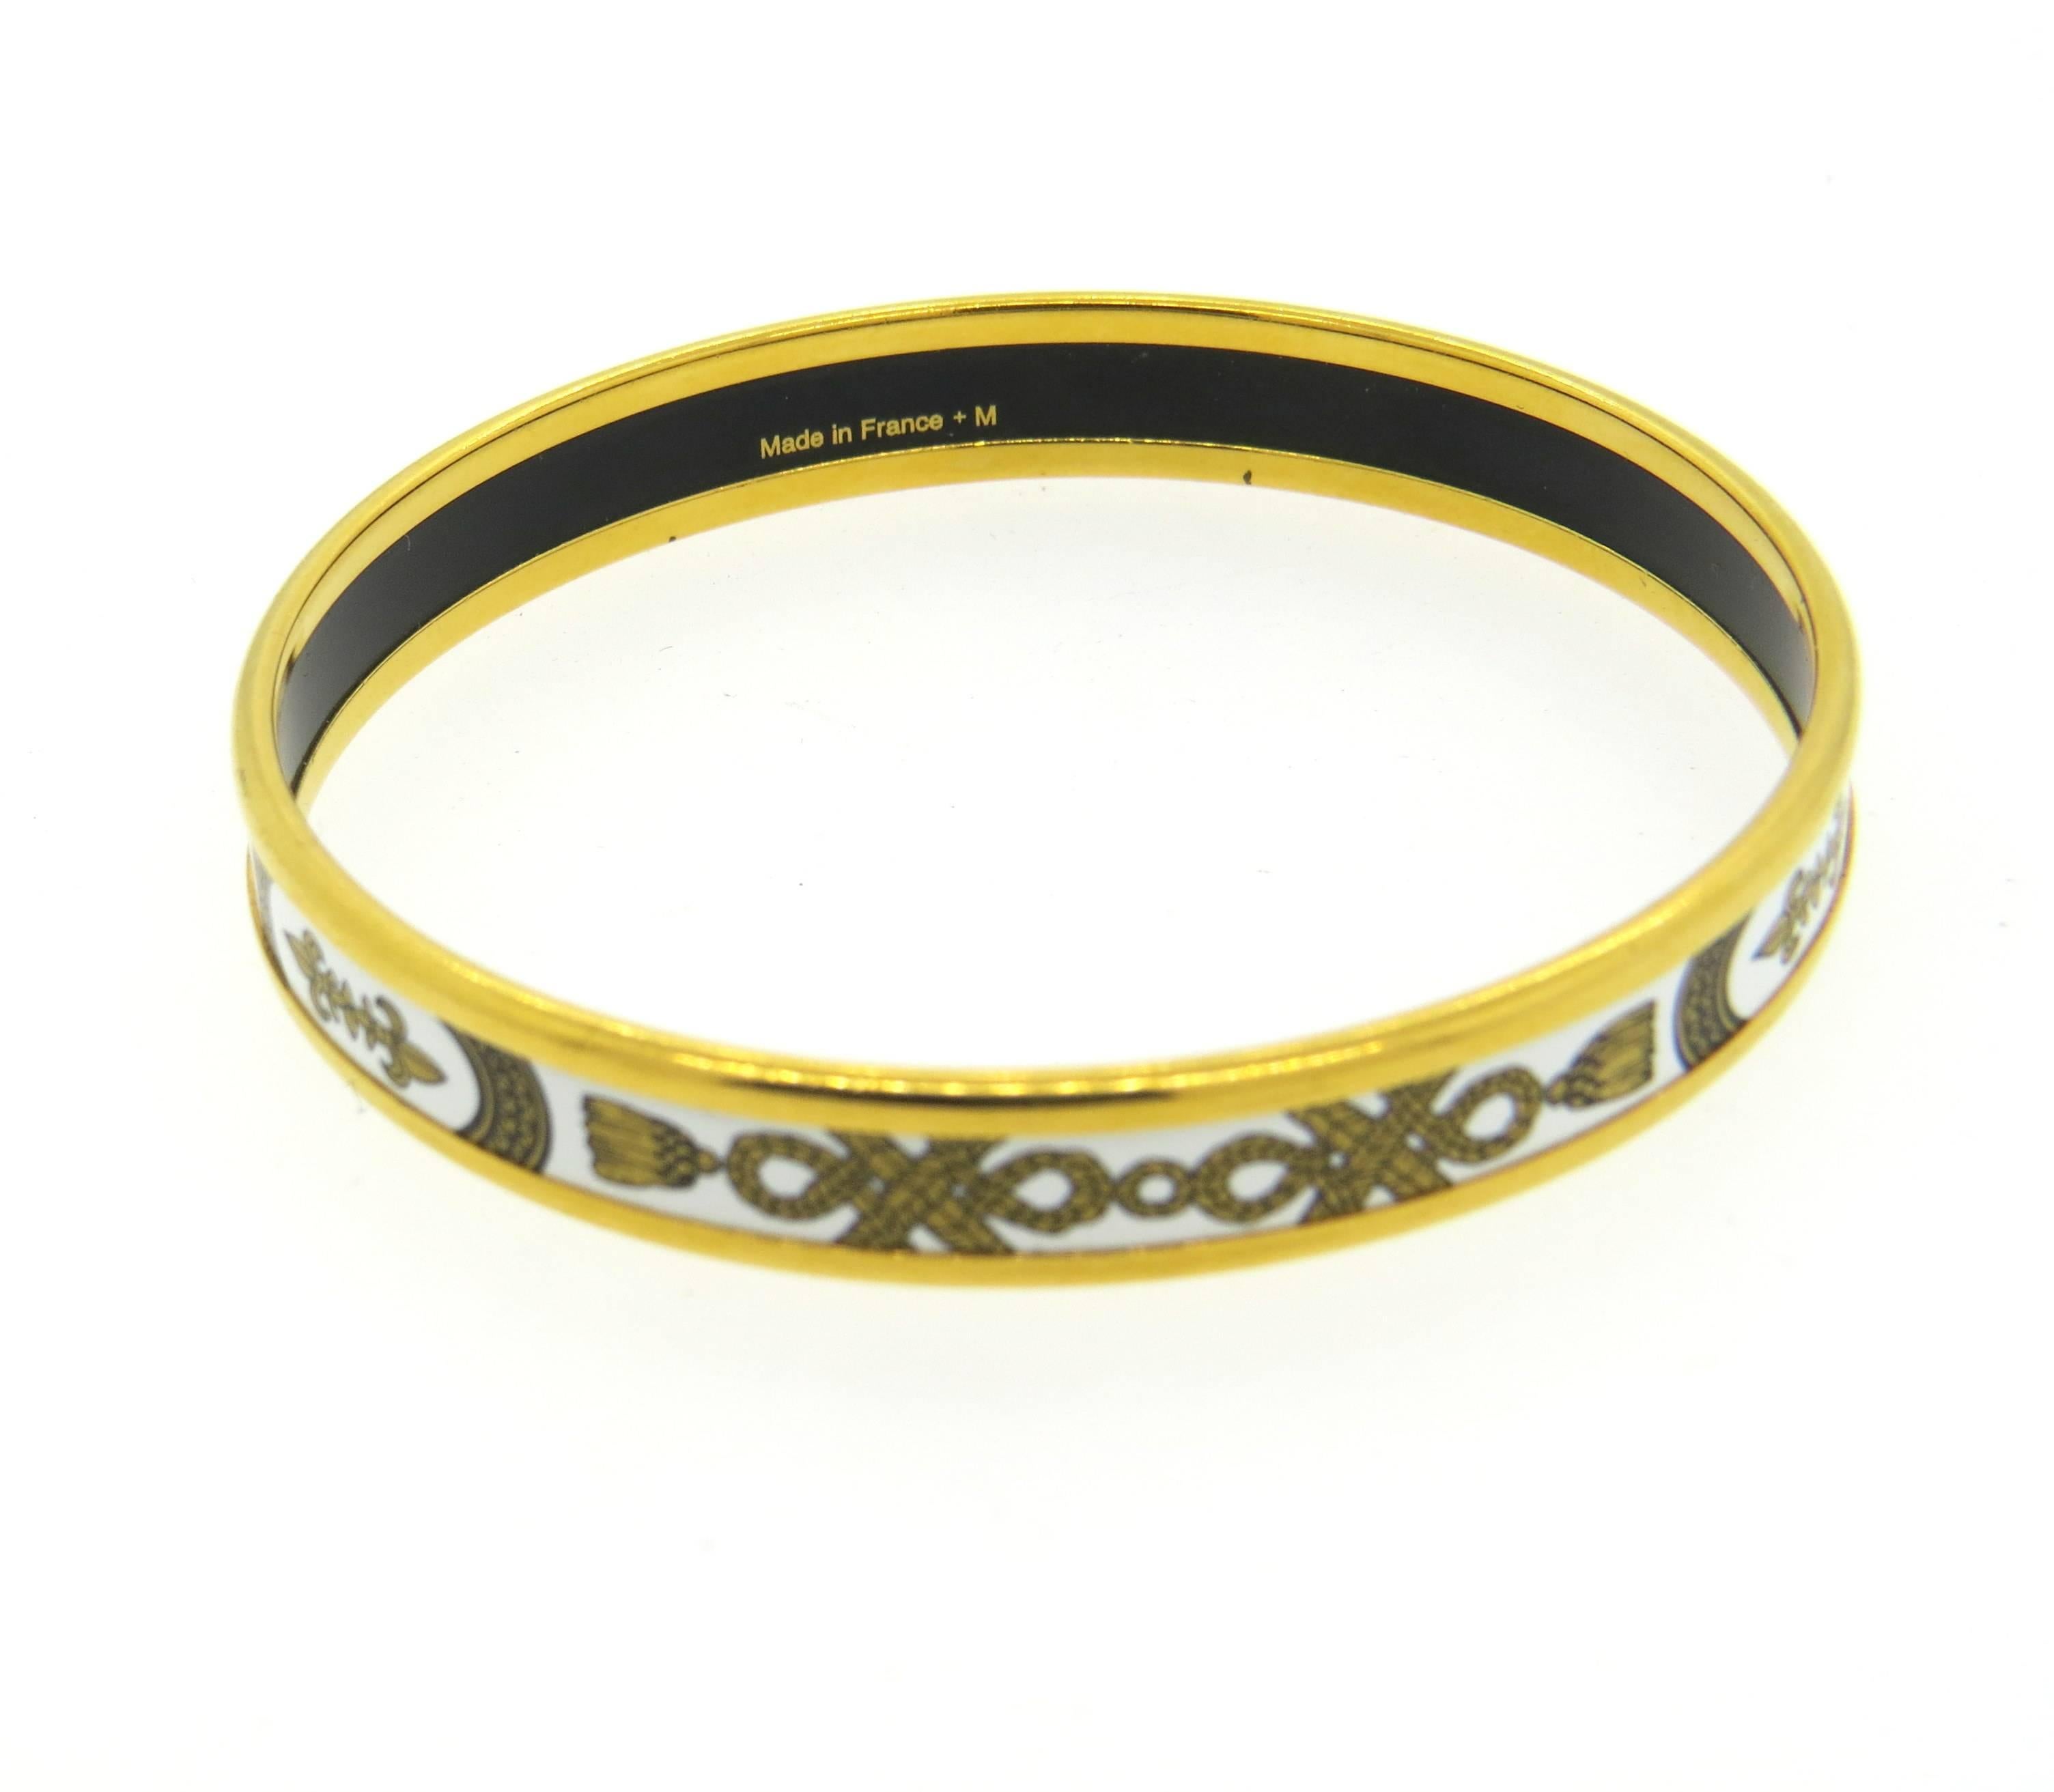 Hermes bangle bracelet, decorated with Fleur de Lis enamel ornament. Bracelet's inner diameter is 62mm (will fit approx. 6 1/2